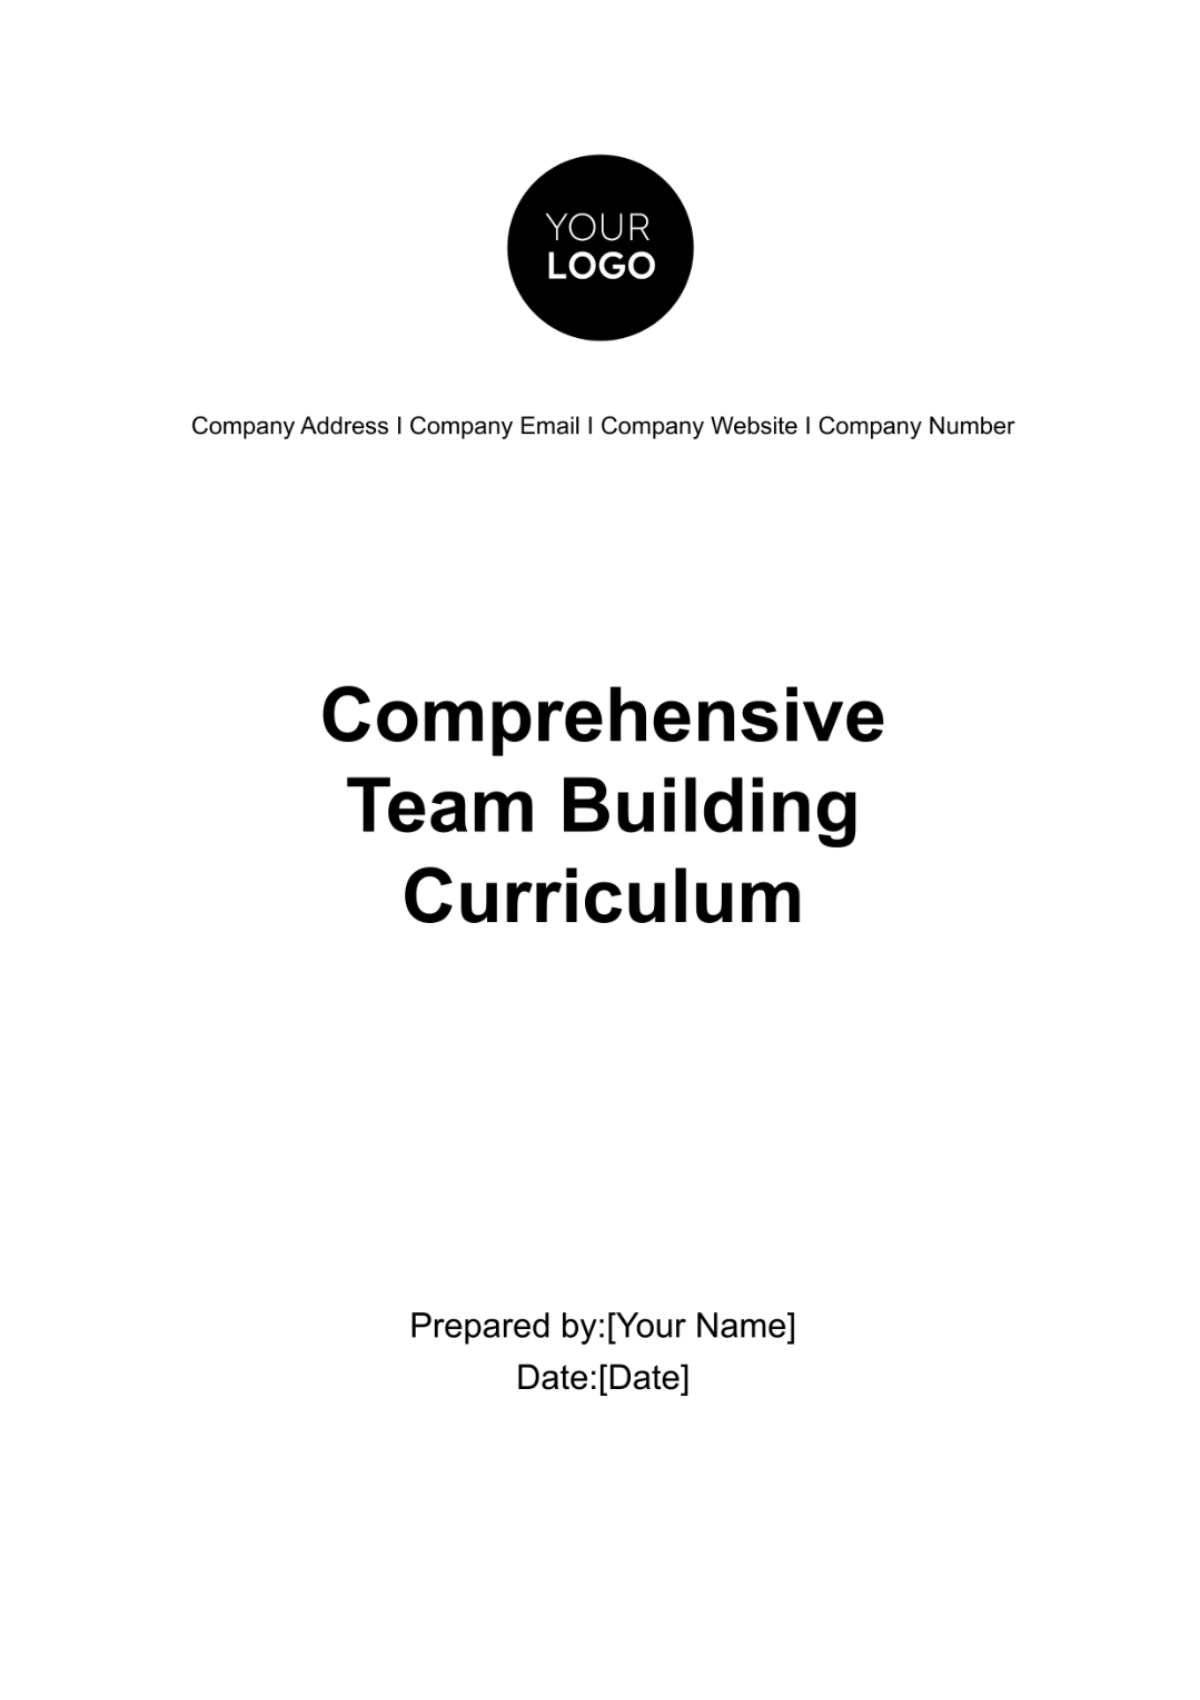 Free Comprehensive Team Building Curriculum HR Template